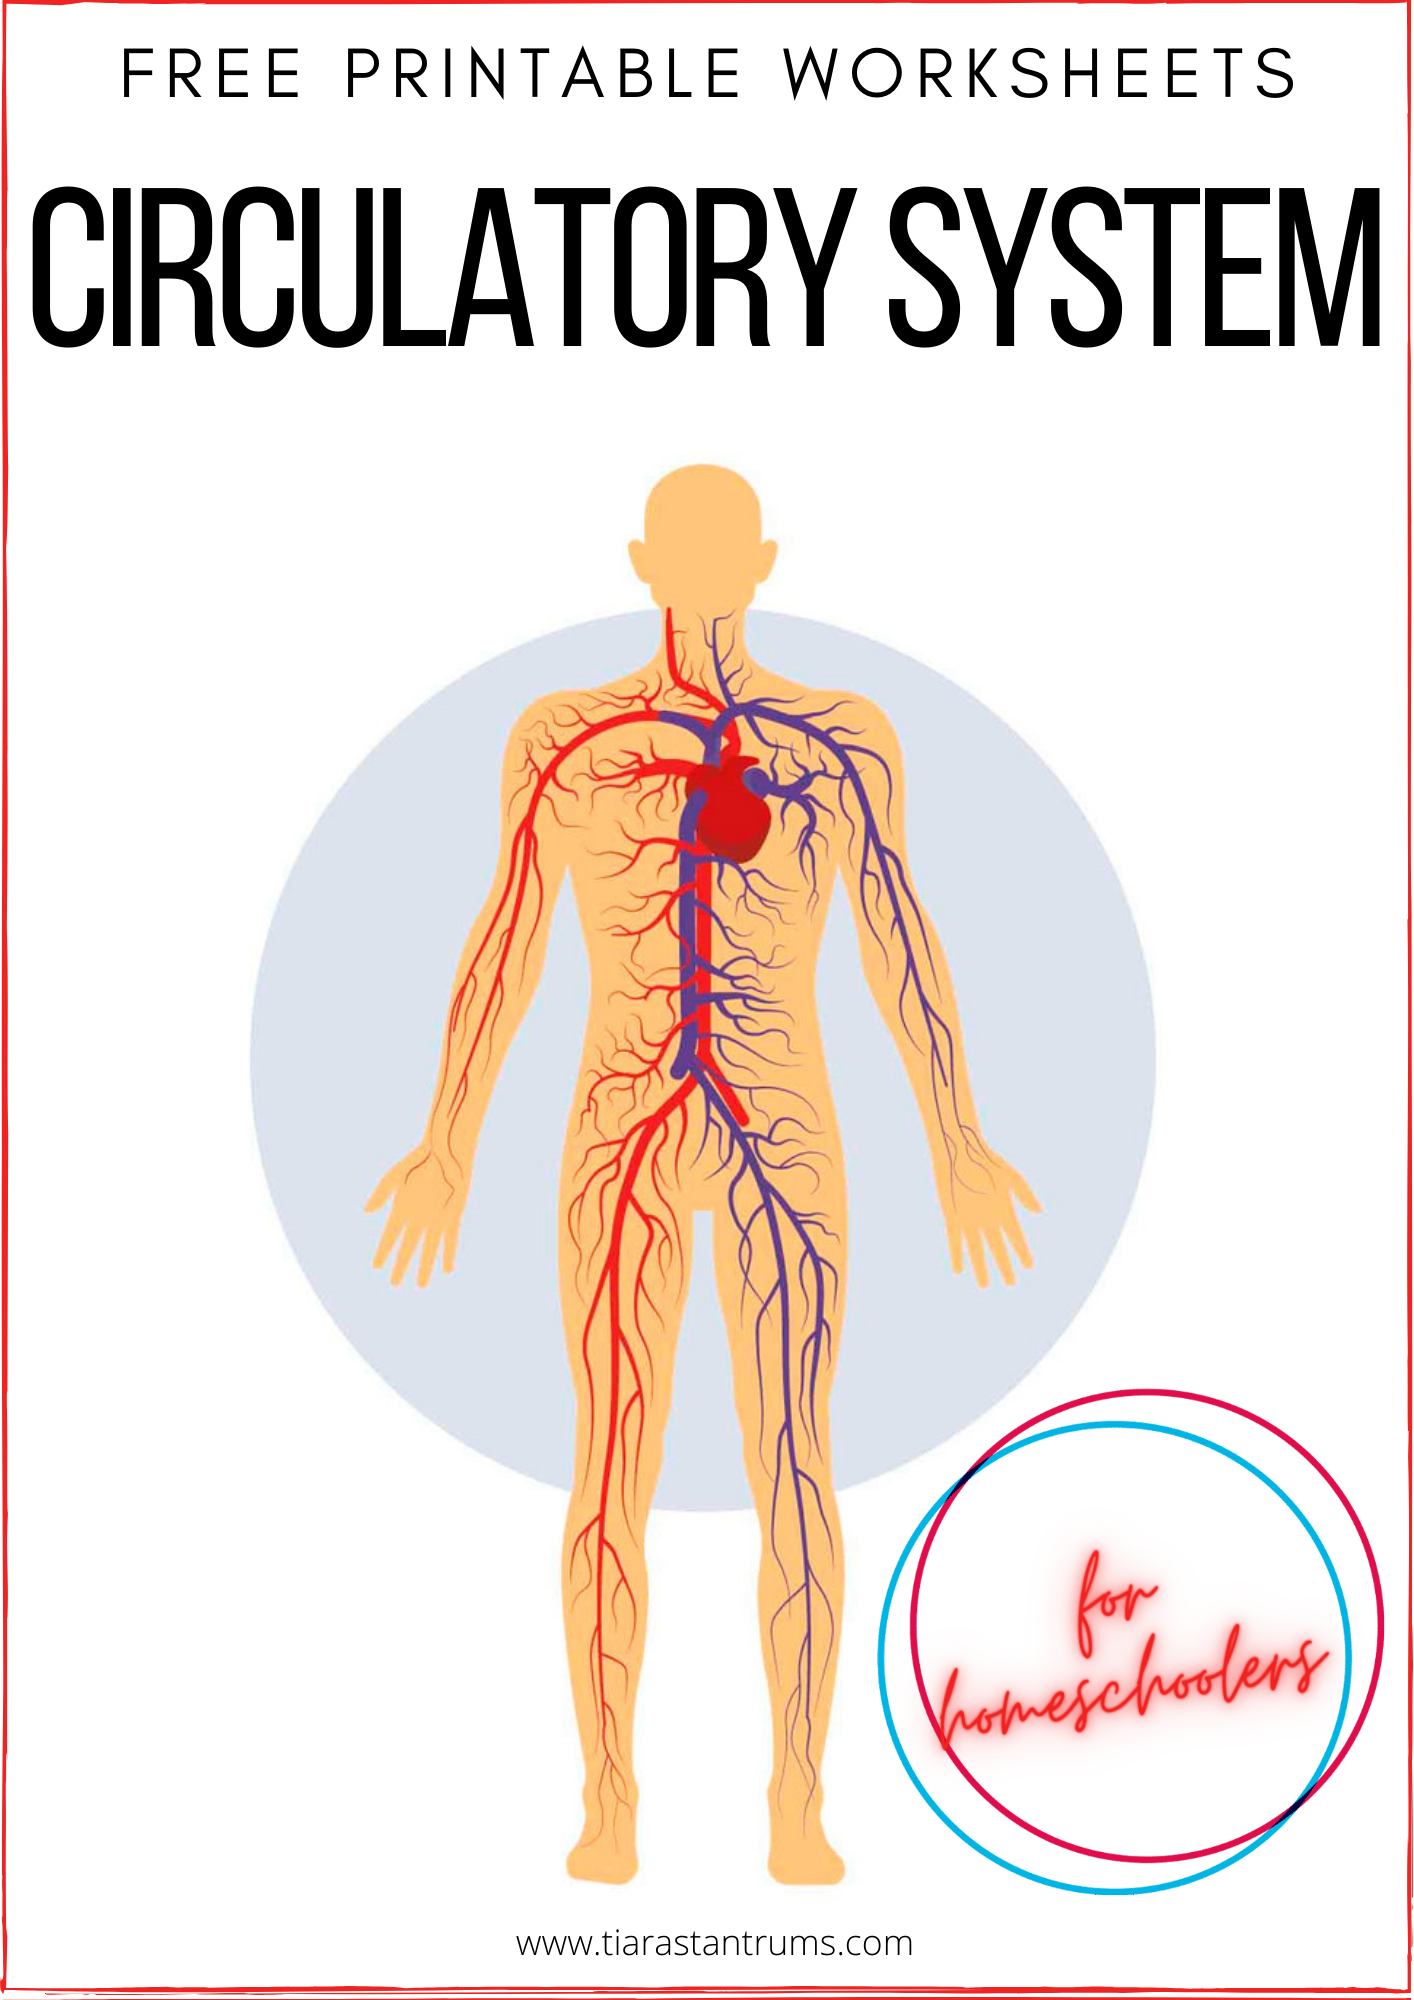 free-circulatory-system-worksheets-printable-tiaras-tantrums